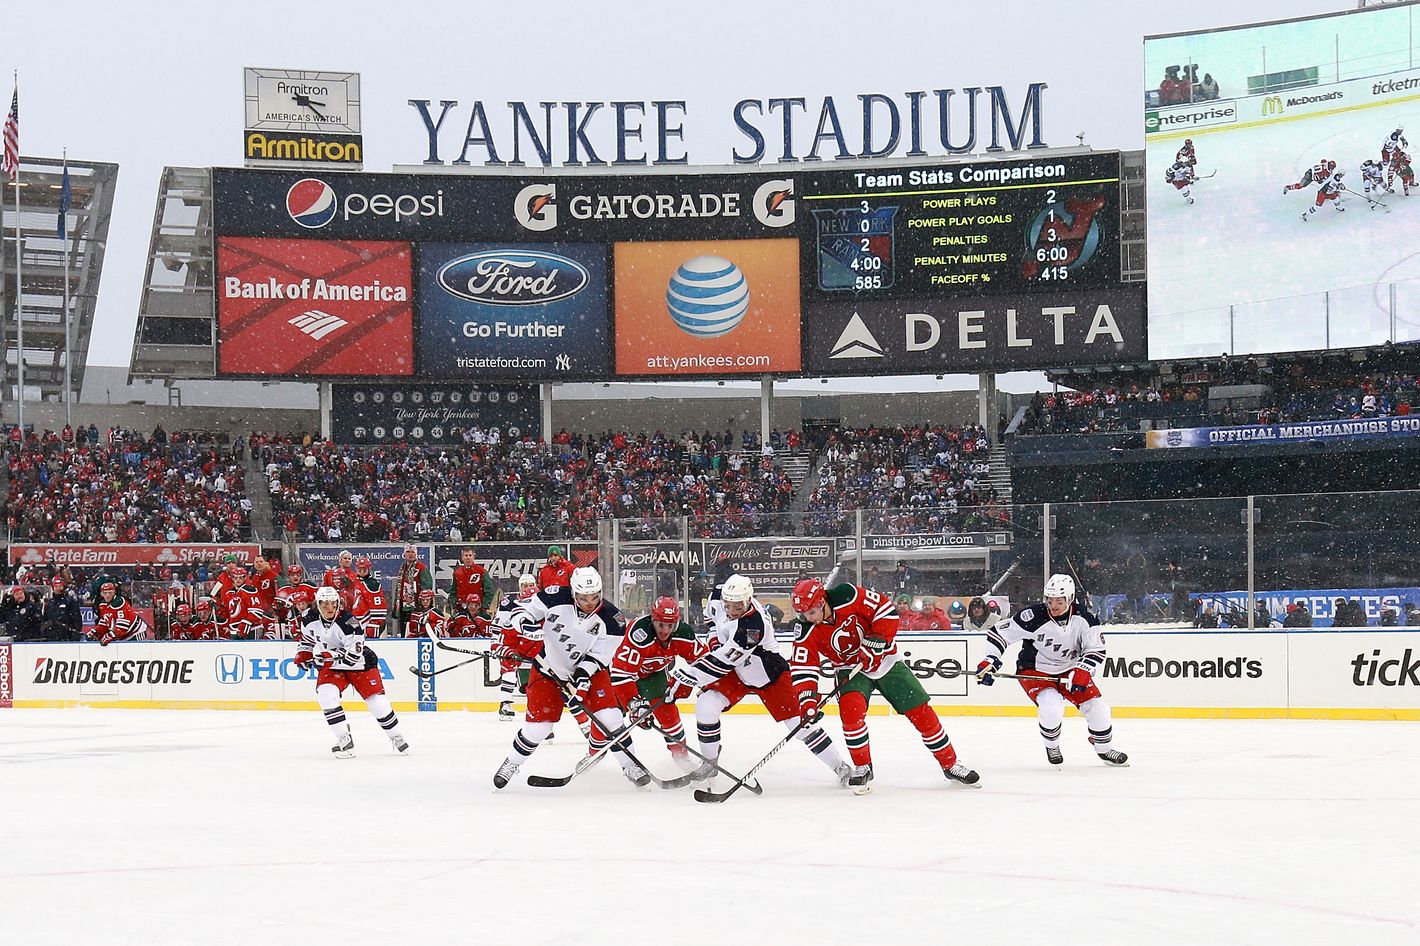 Bantam Major: Devils and Avalanche (NJ) Skate to 2-2 Draw at Yankee Stadium